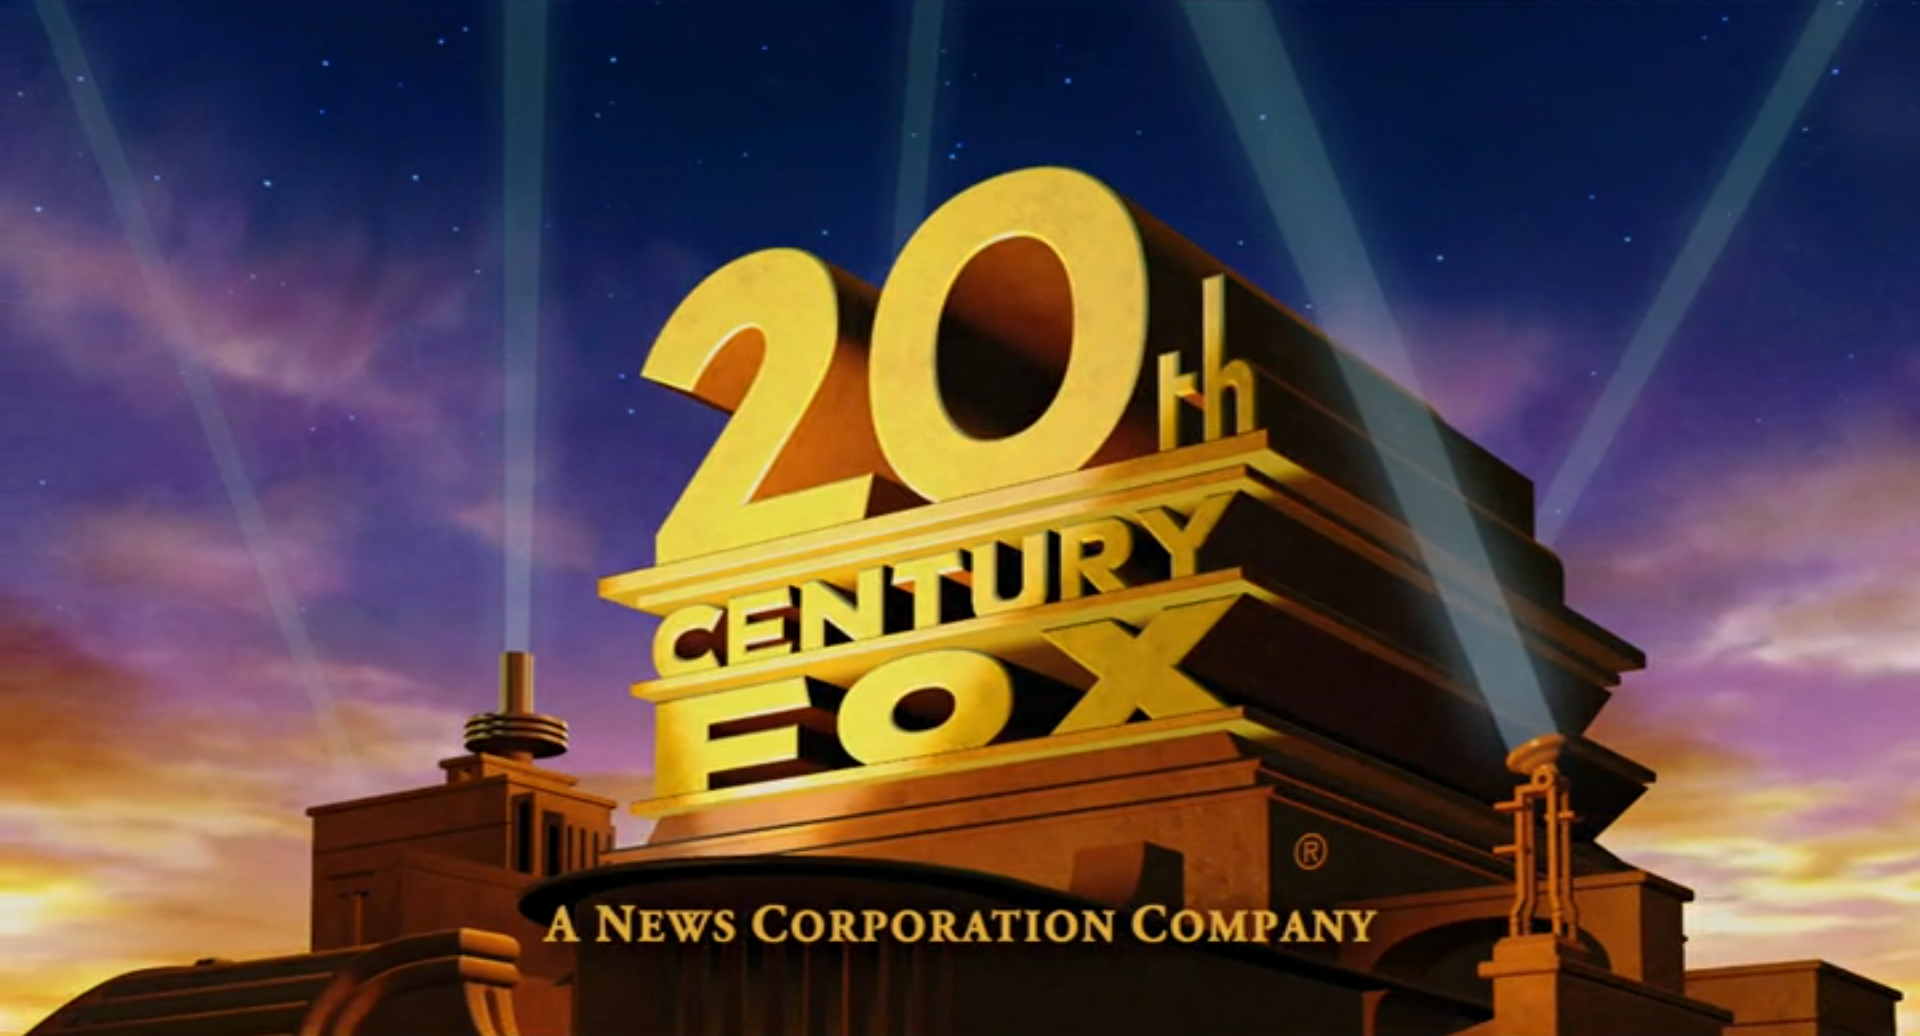 20th century fox logo 1994 